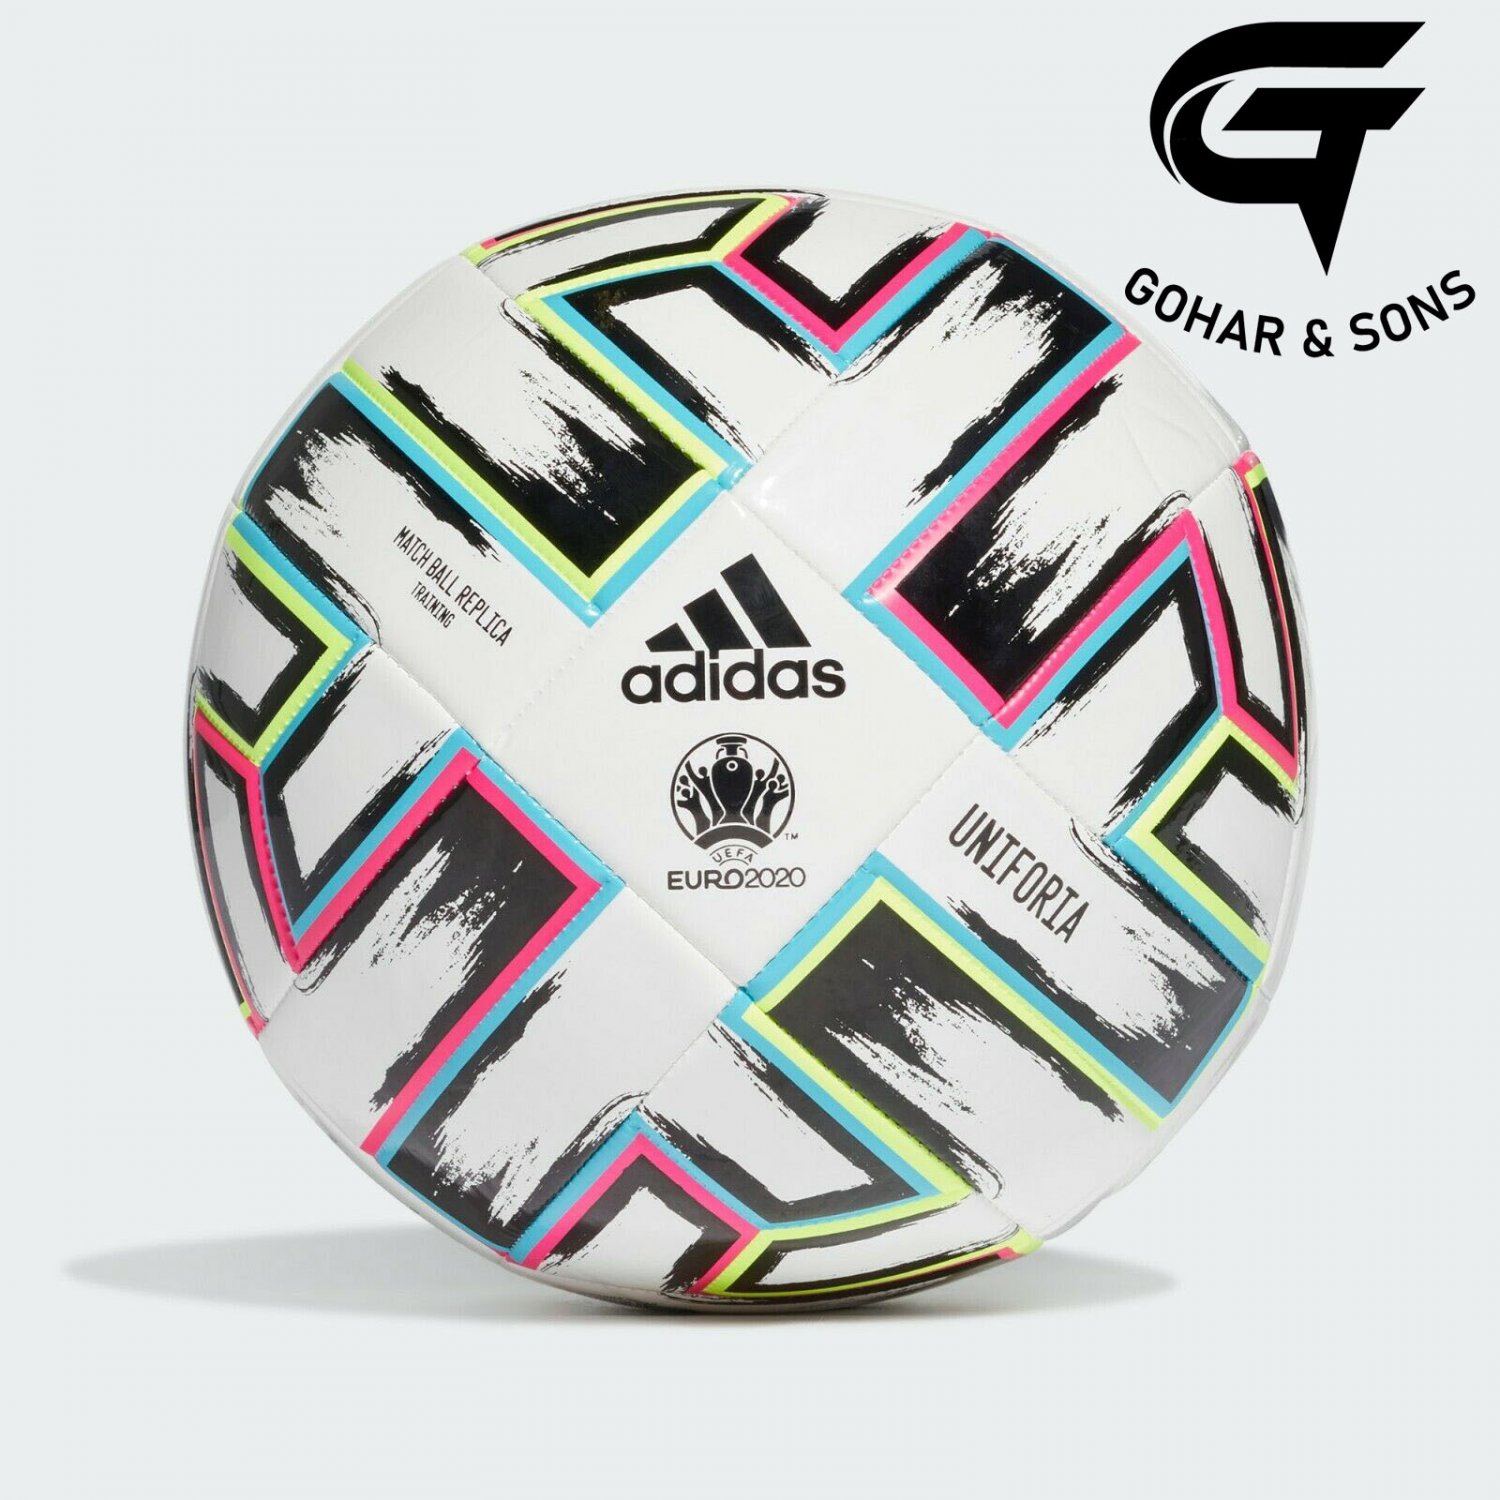 UNIFORIA ADIDAS Football FIFA SOCCER MATCH BALL Size 5